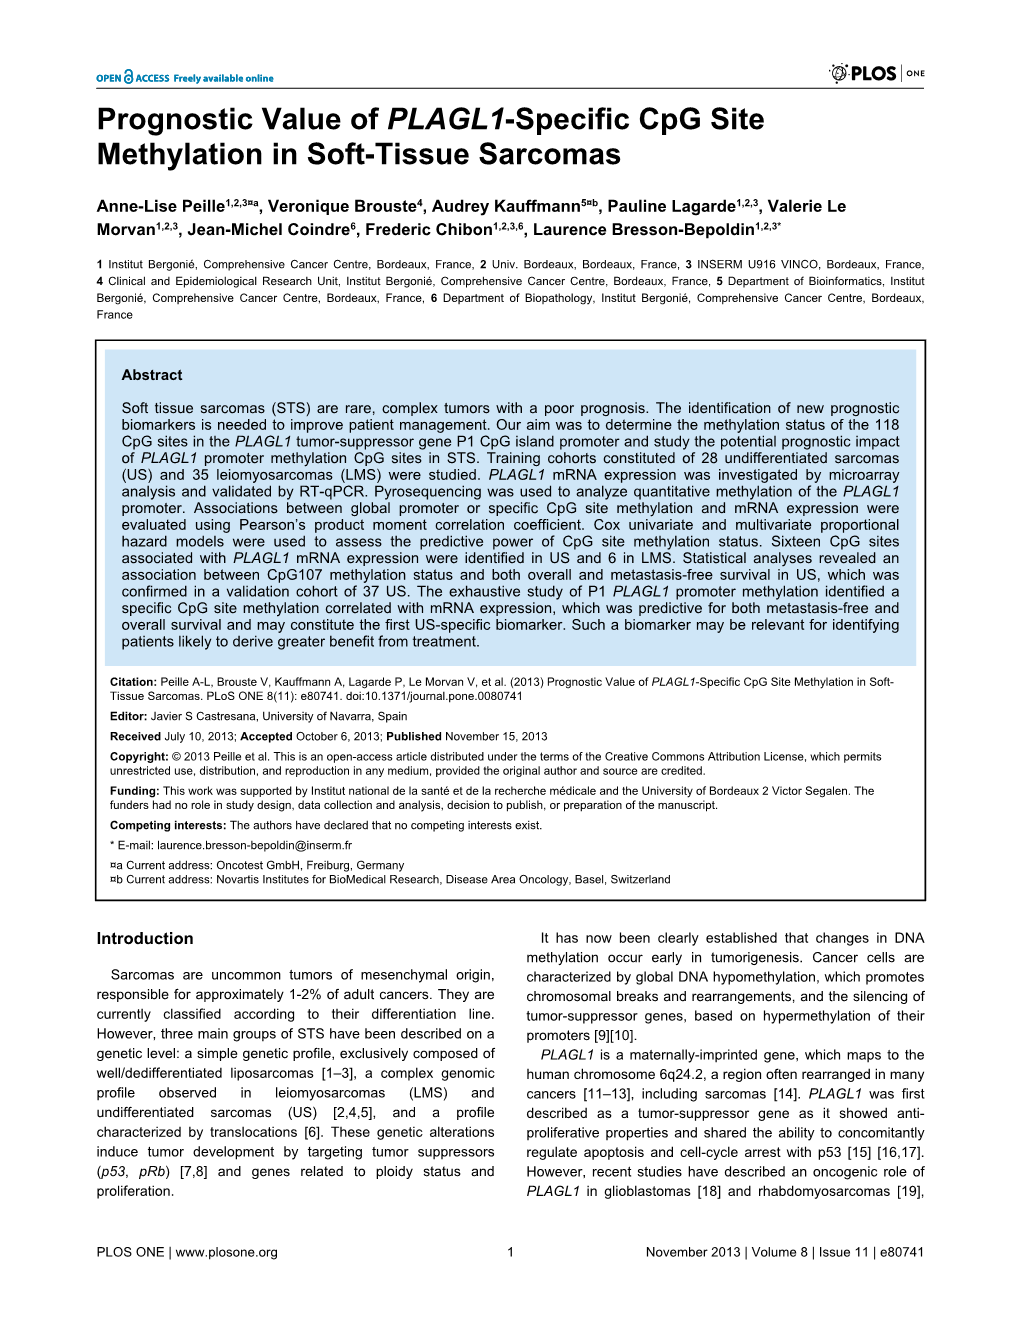 Prognostic Value of PLAGL1-Specific Cpg Site Methylation in Soft-Tissue Sarcomas